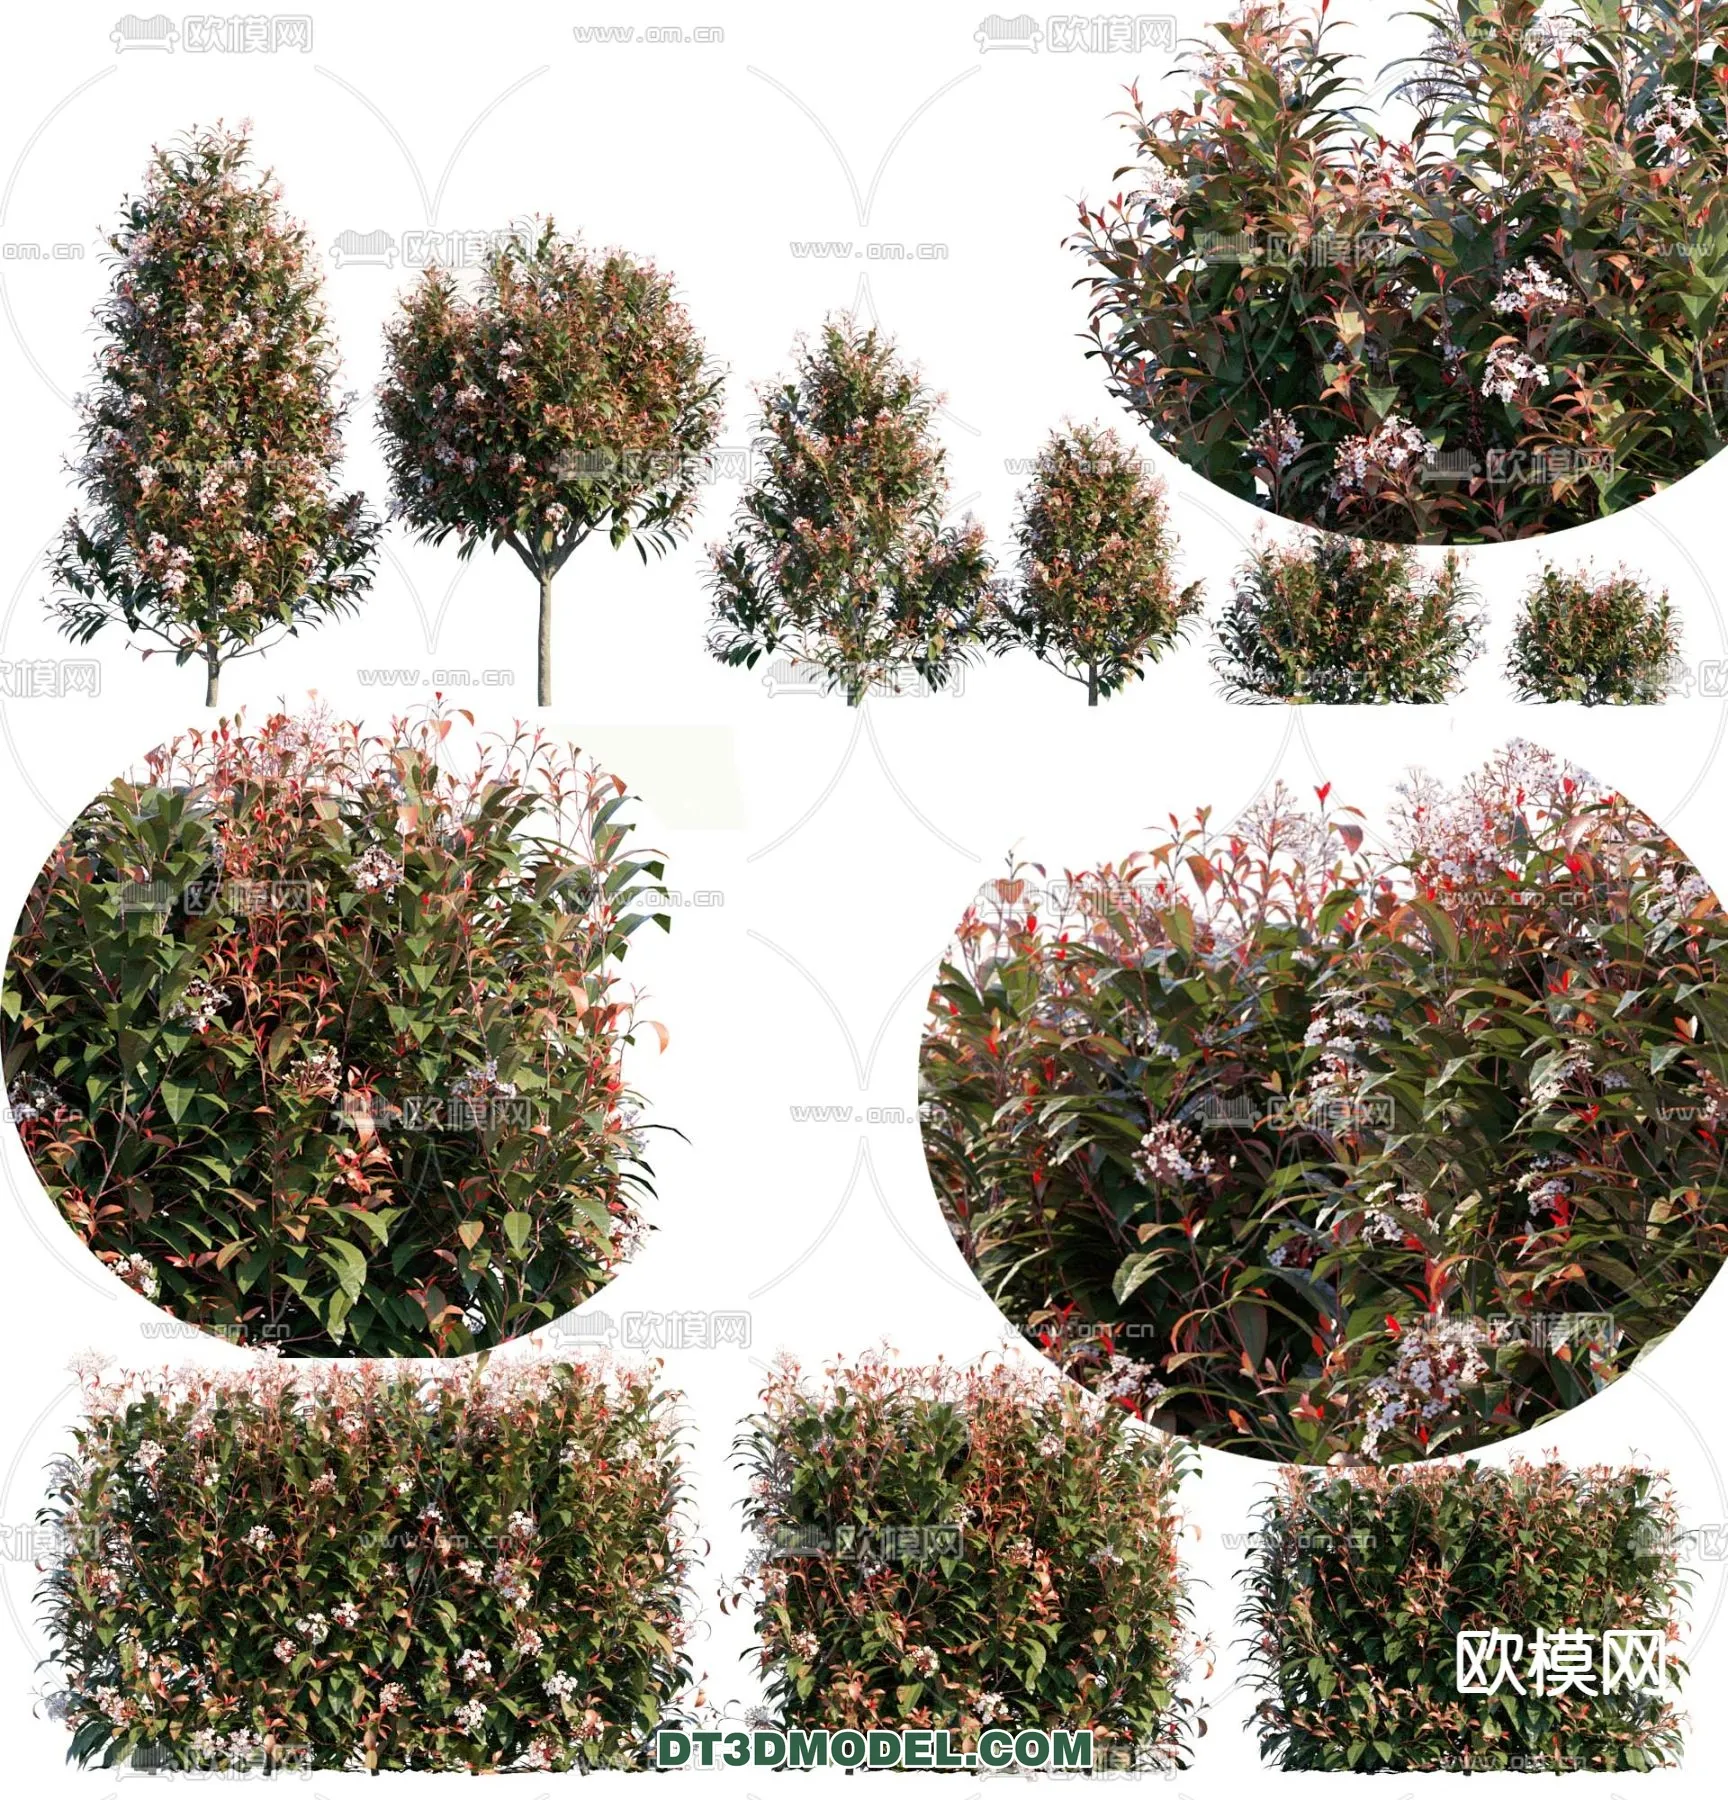 PLANTS – BUSH – VRAY / CORONA – 3D MODEL – 284